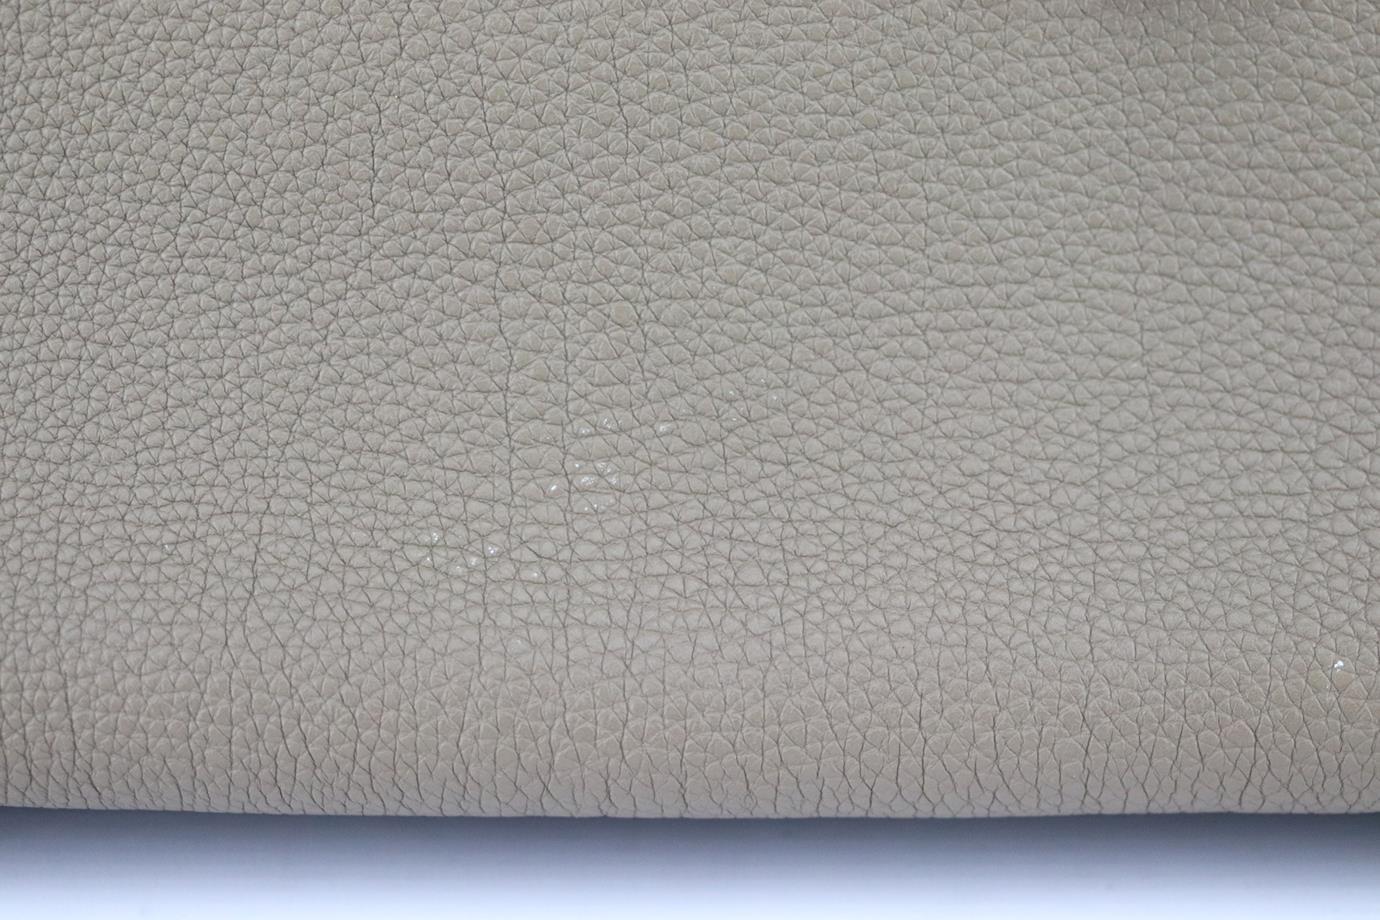 Hermès 2011 Birkin 35cm Togo Leather Bag For Sale 5